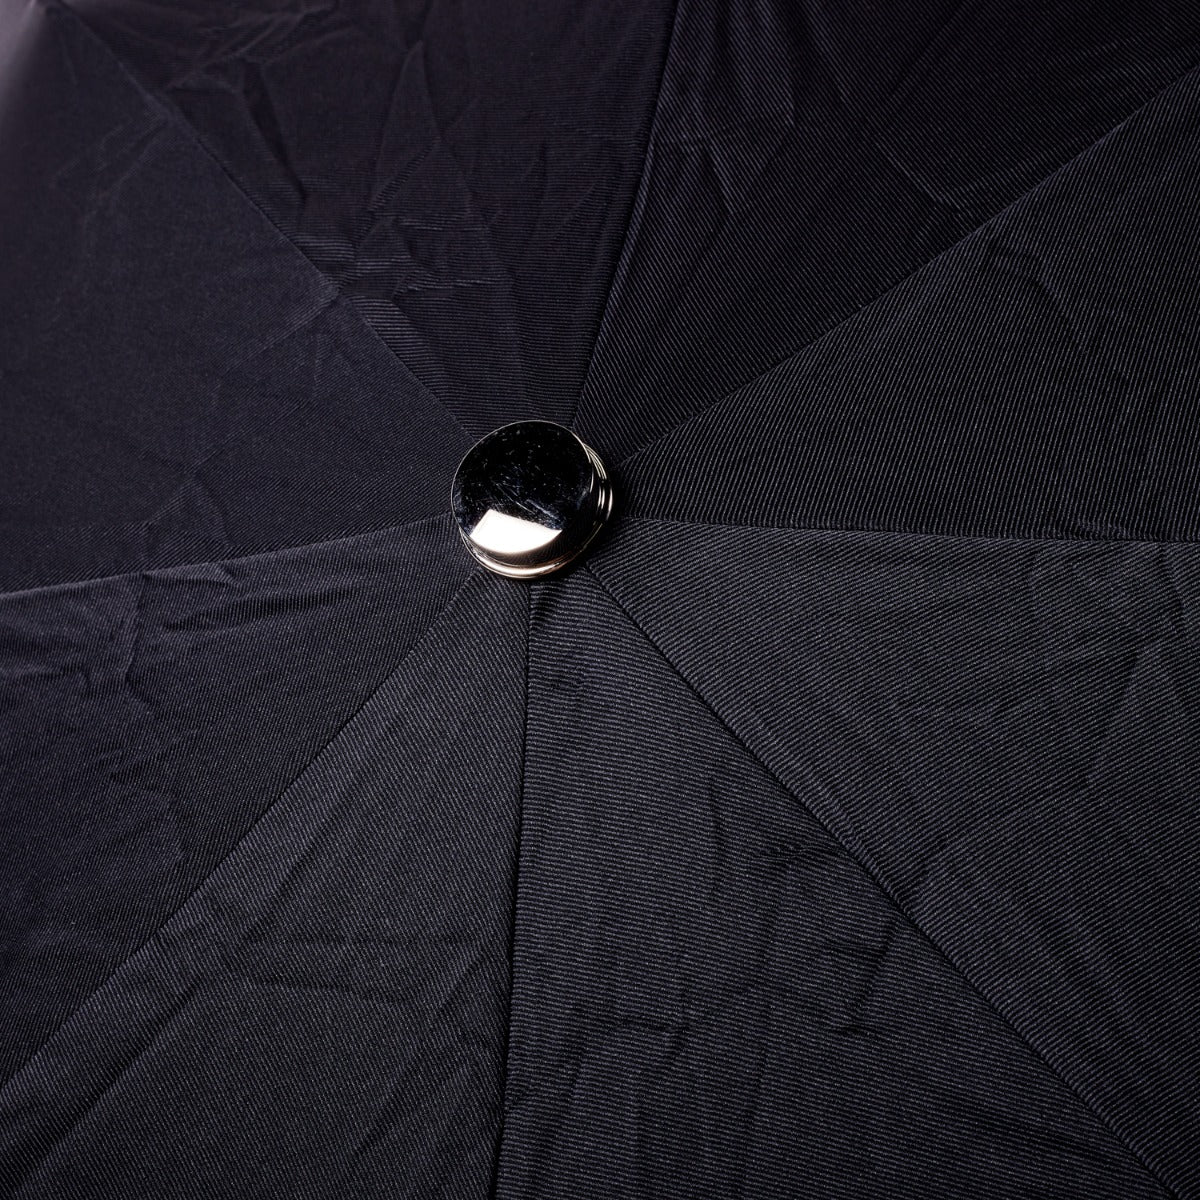 A KirbyAllison.com Brown Alligator Travel Umbrella with Black Canopy